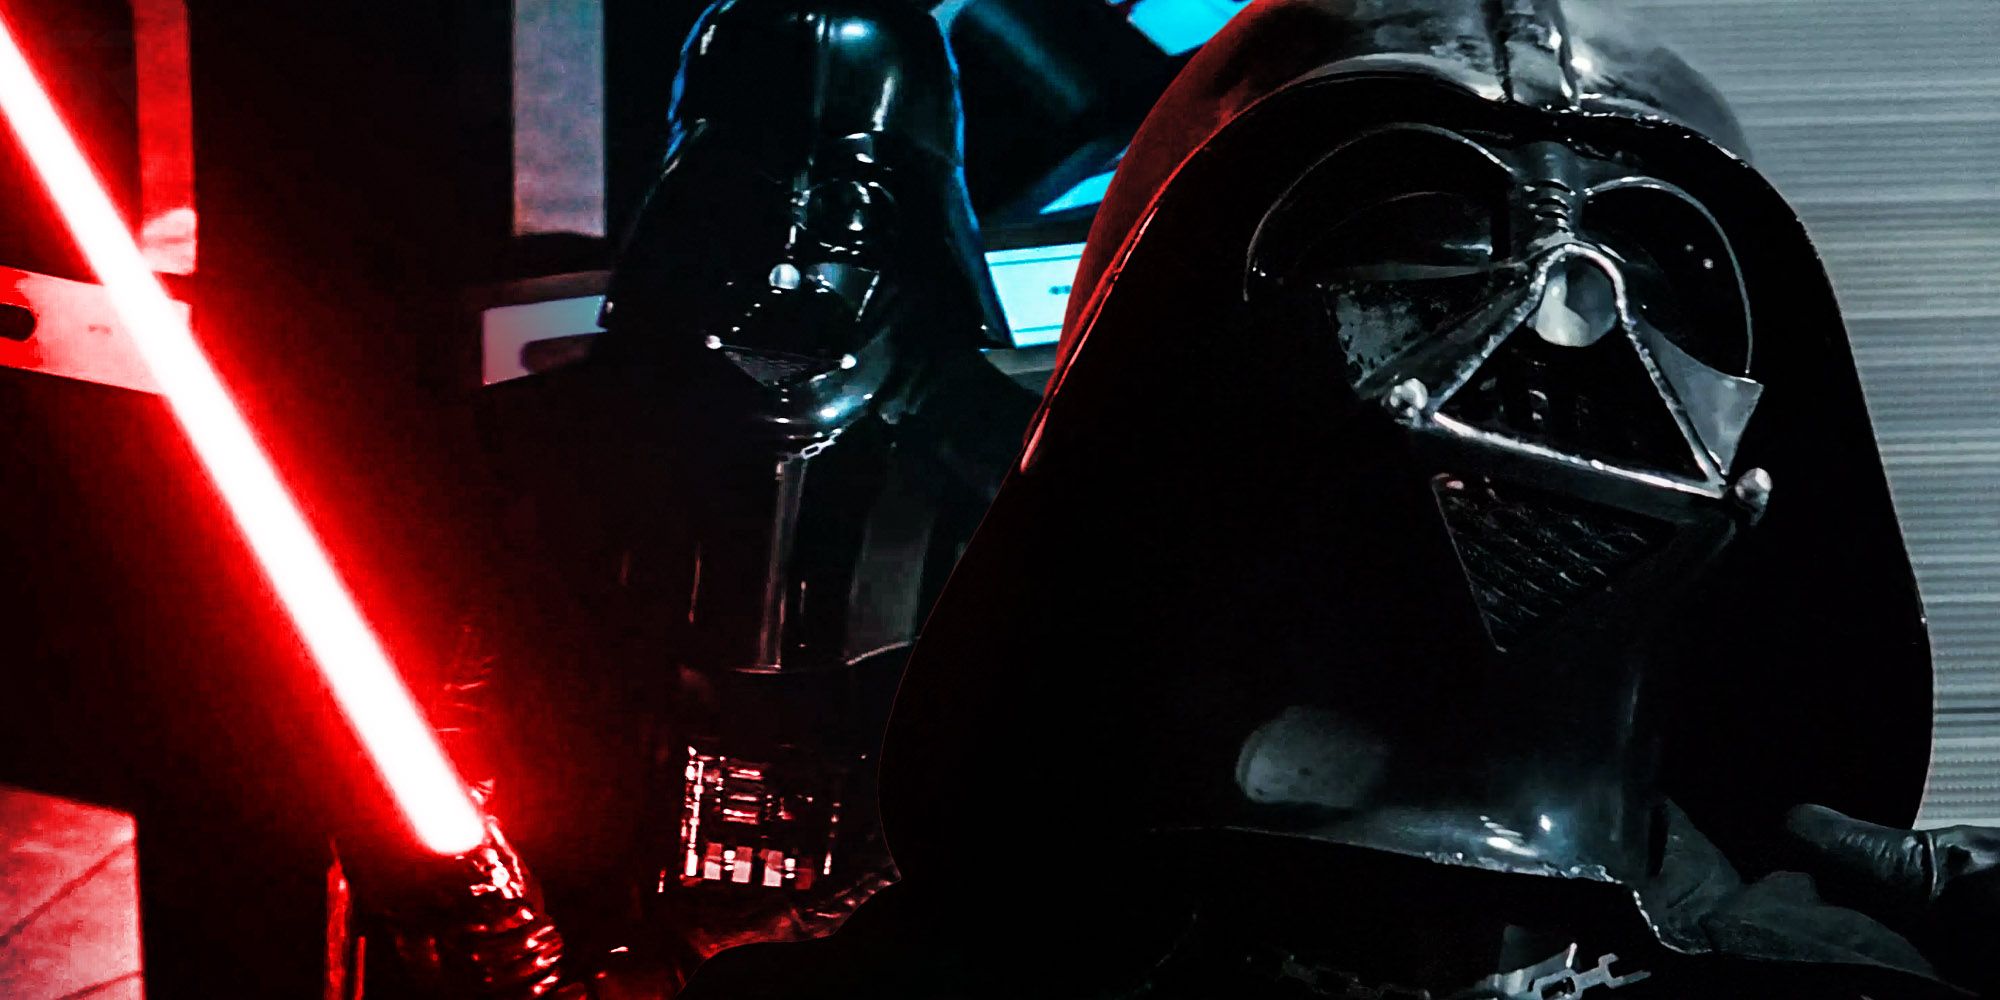 What happened to Darth Vader Lightsaber after star wars return of the jedi